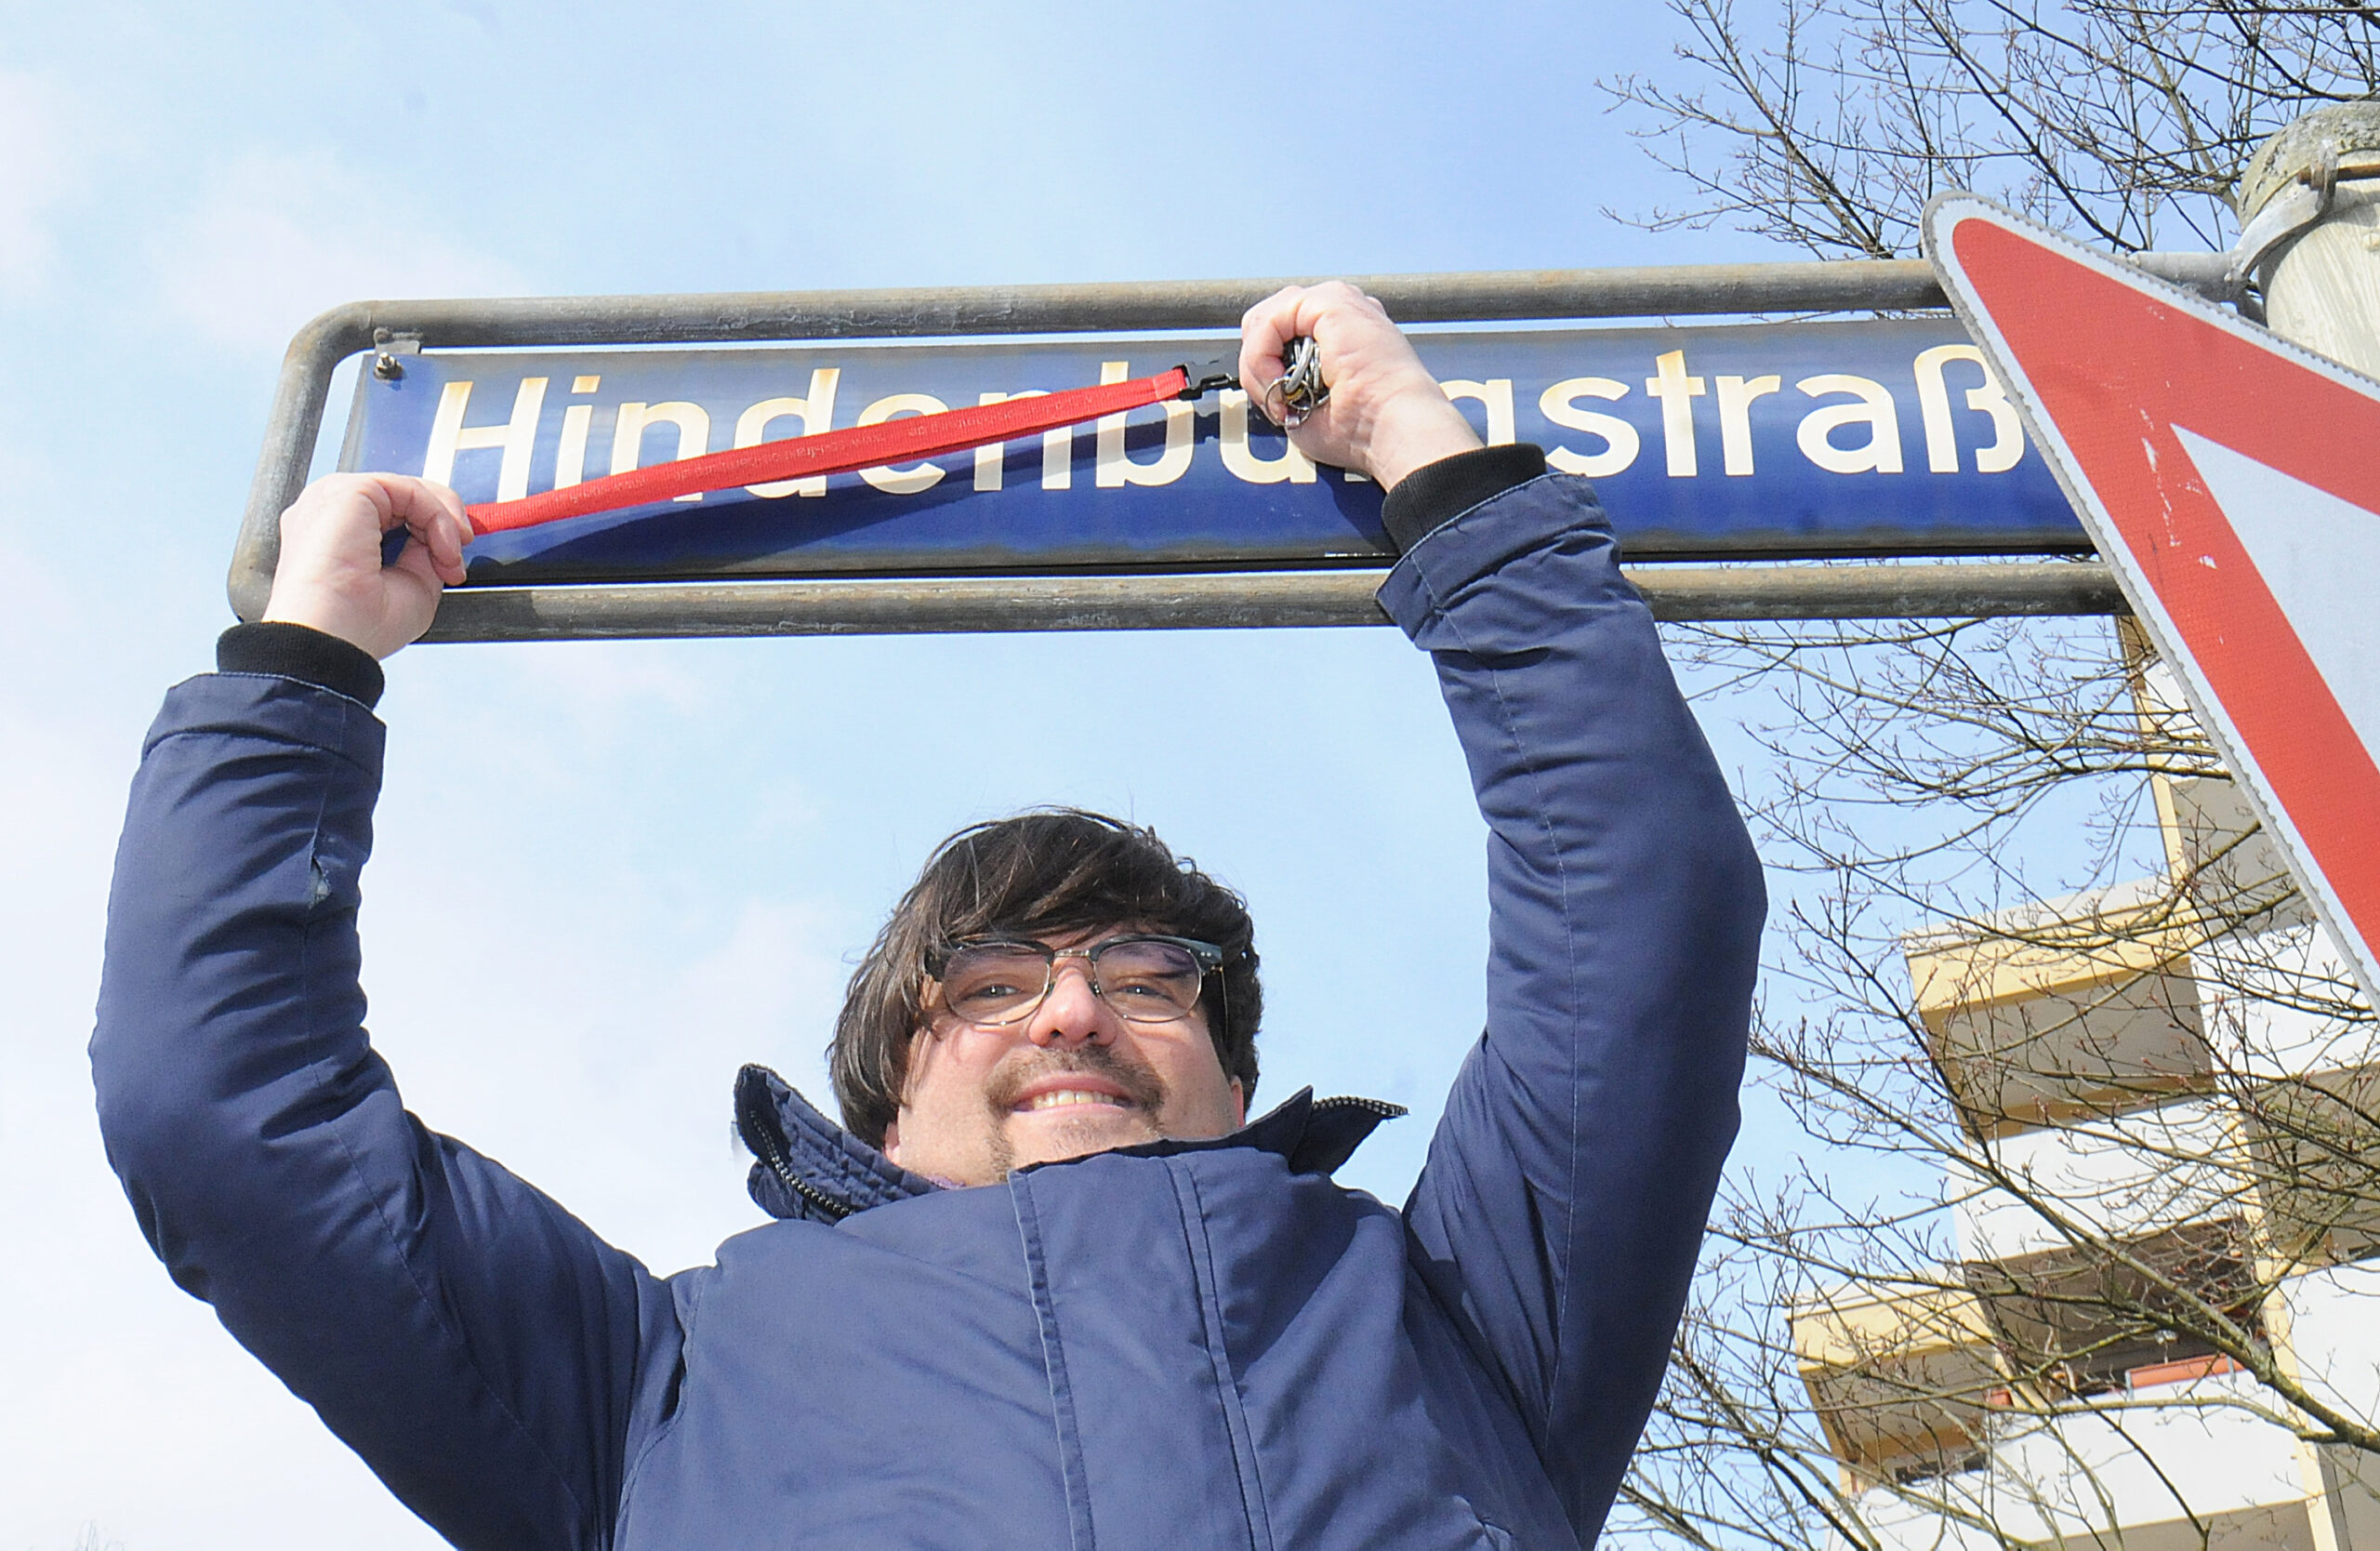 Hindenburgstraße